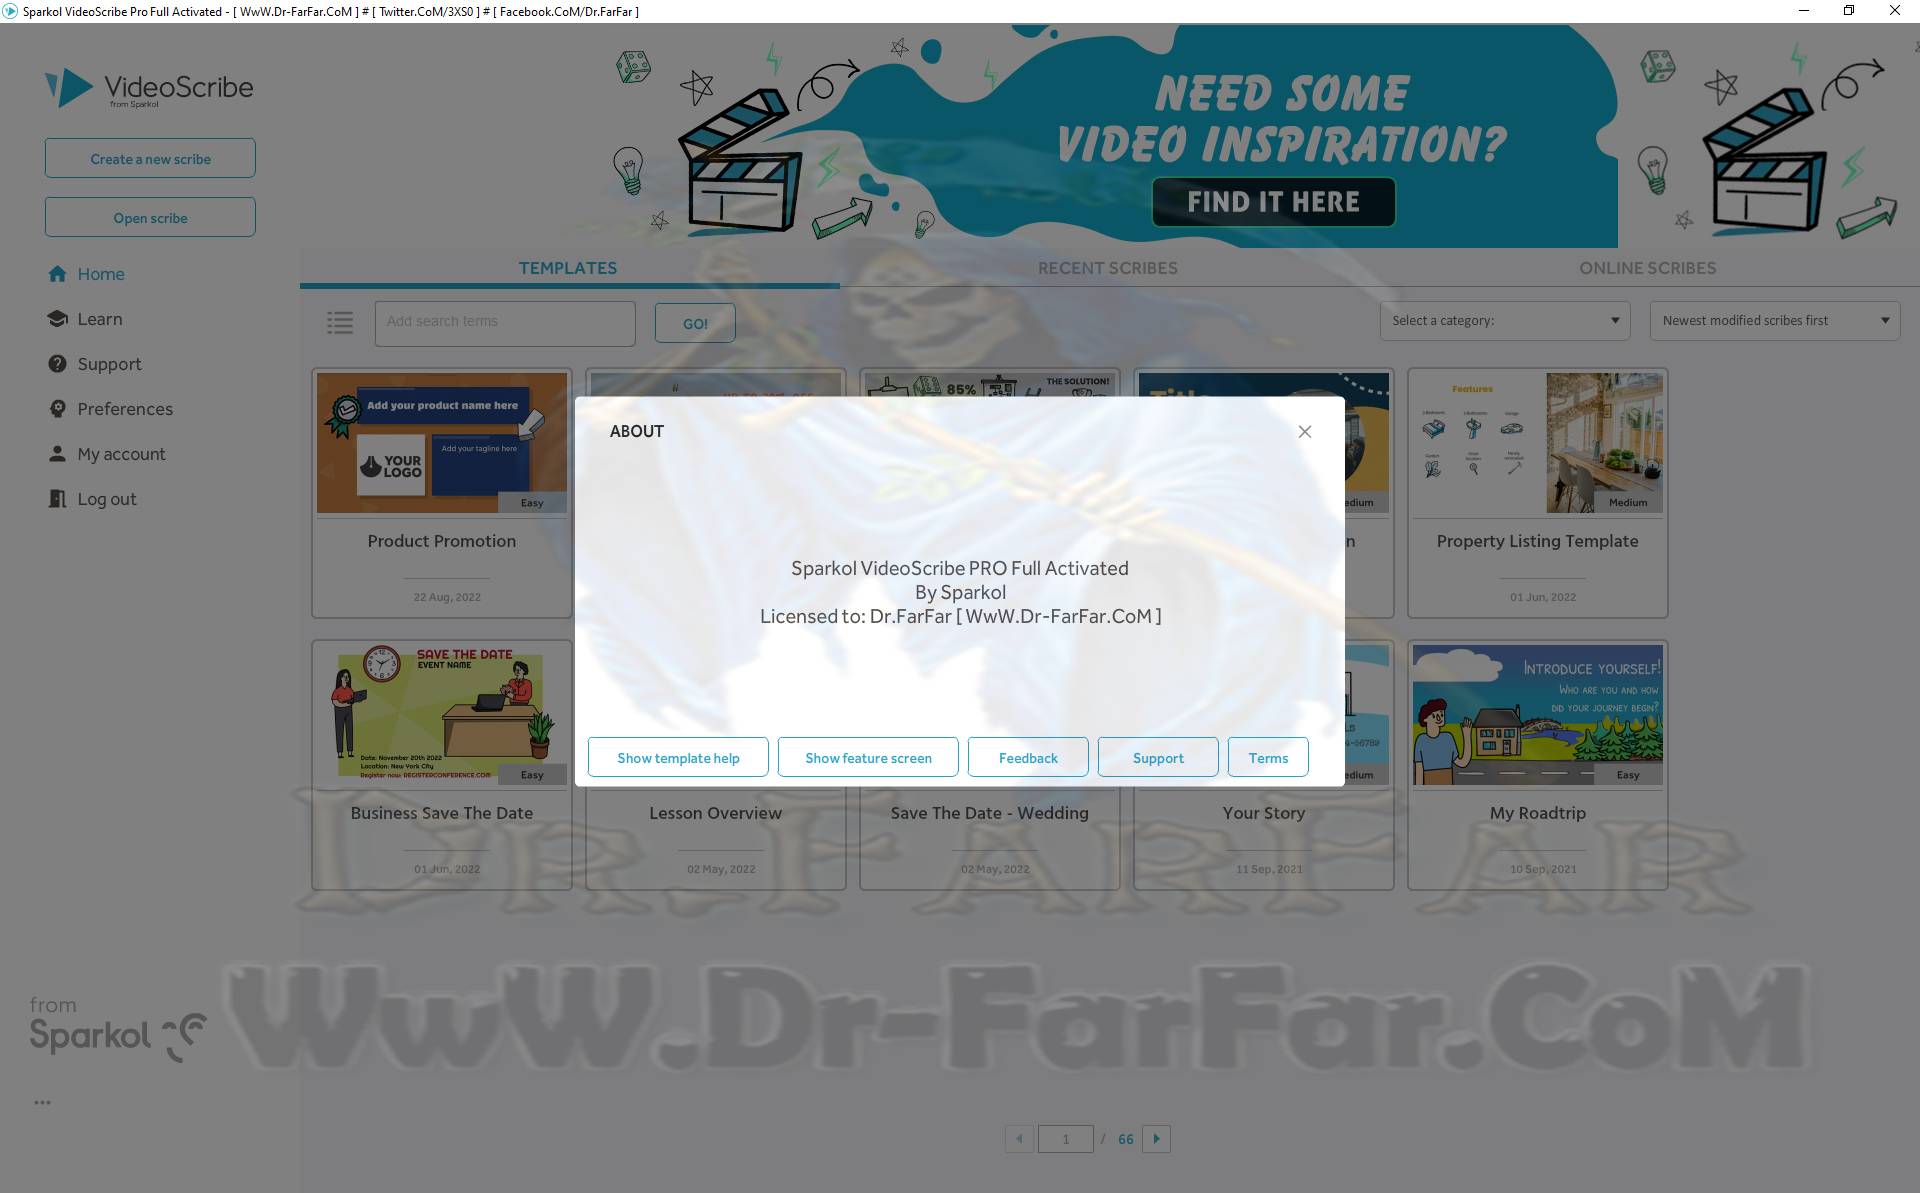 www.Dr-FarFar.com